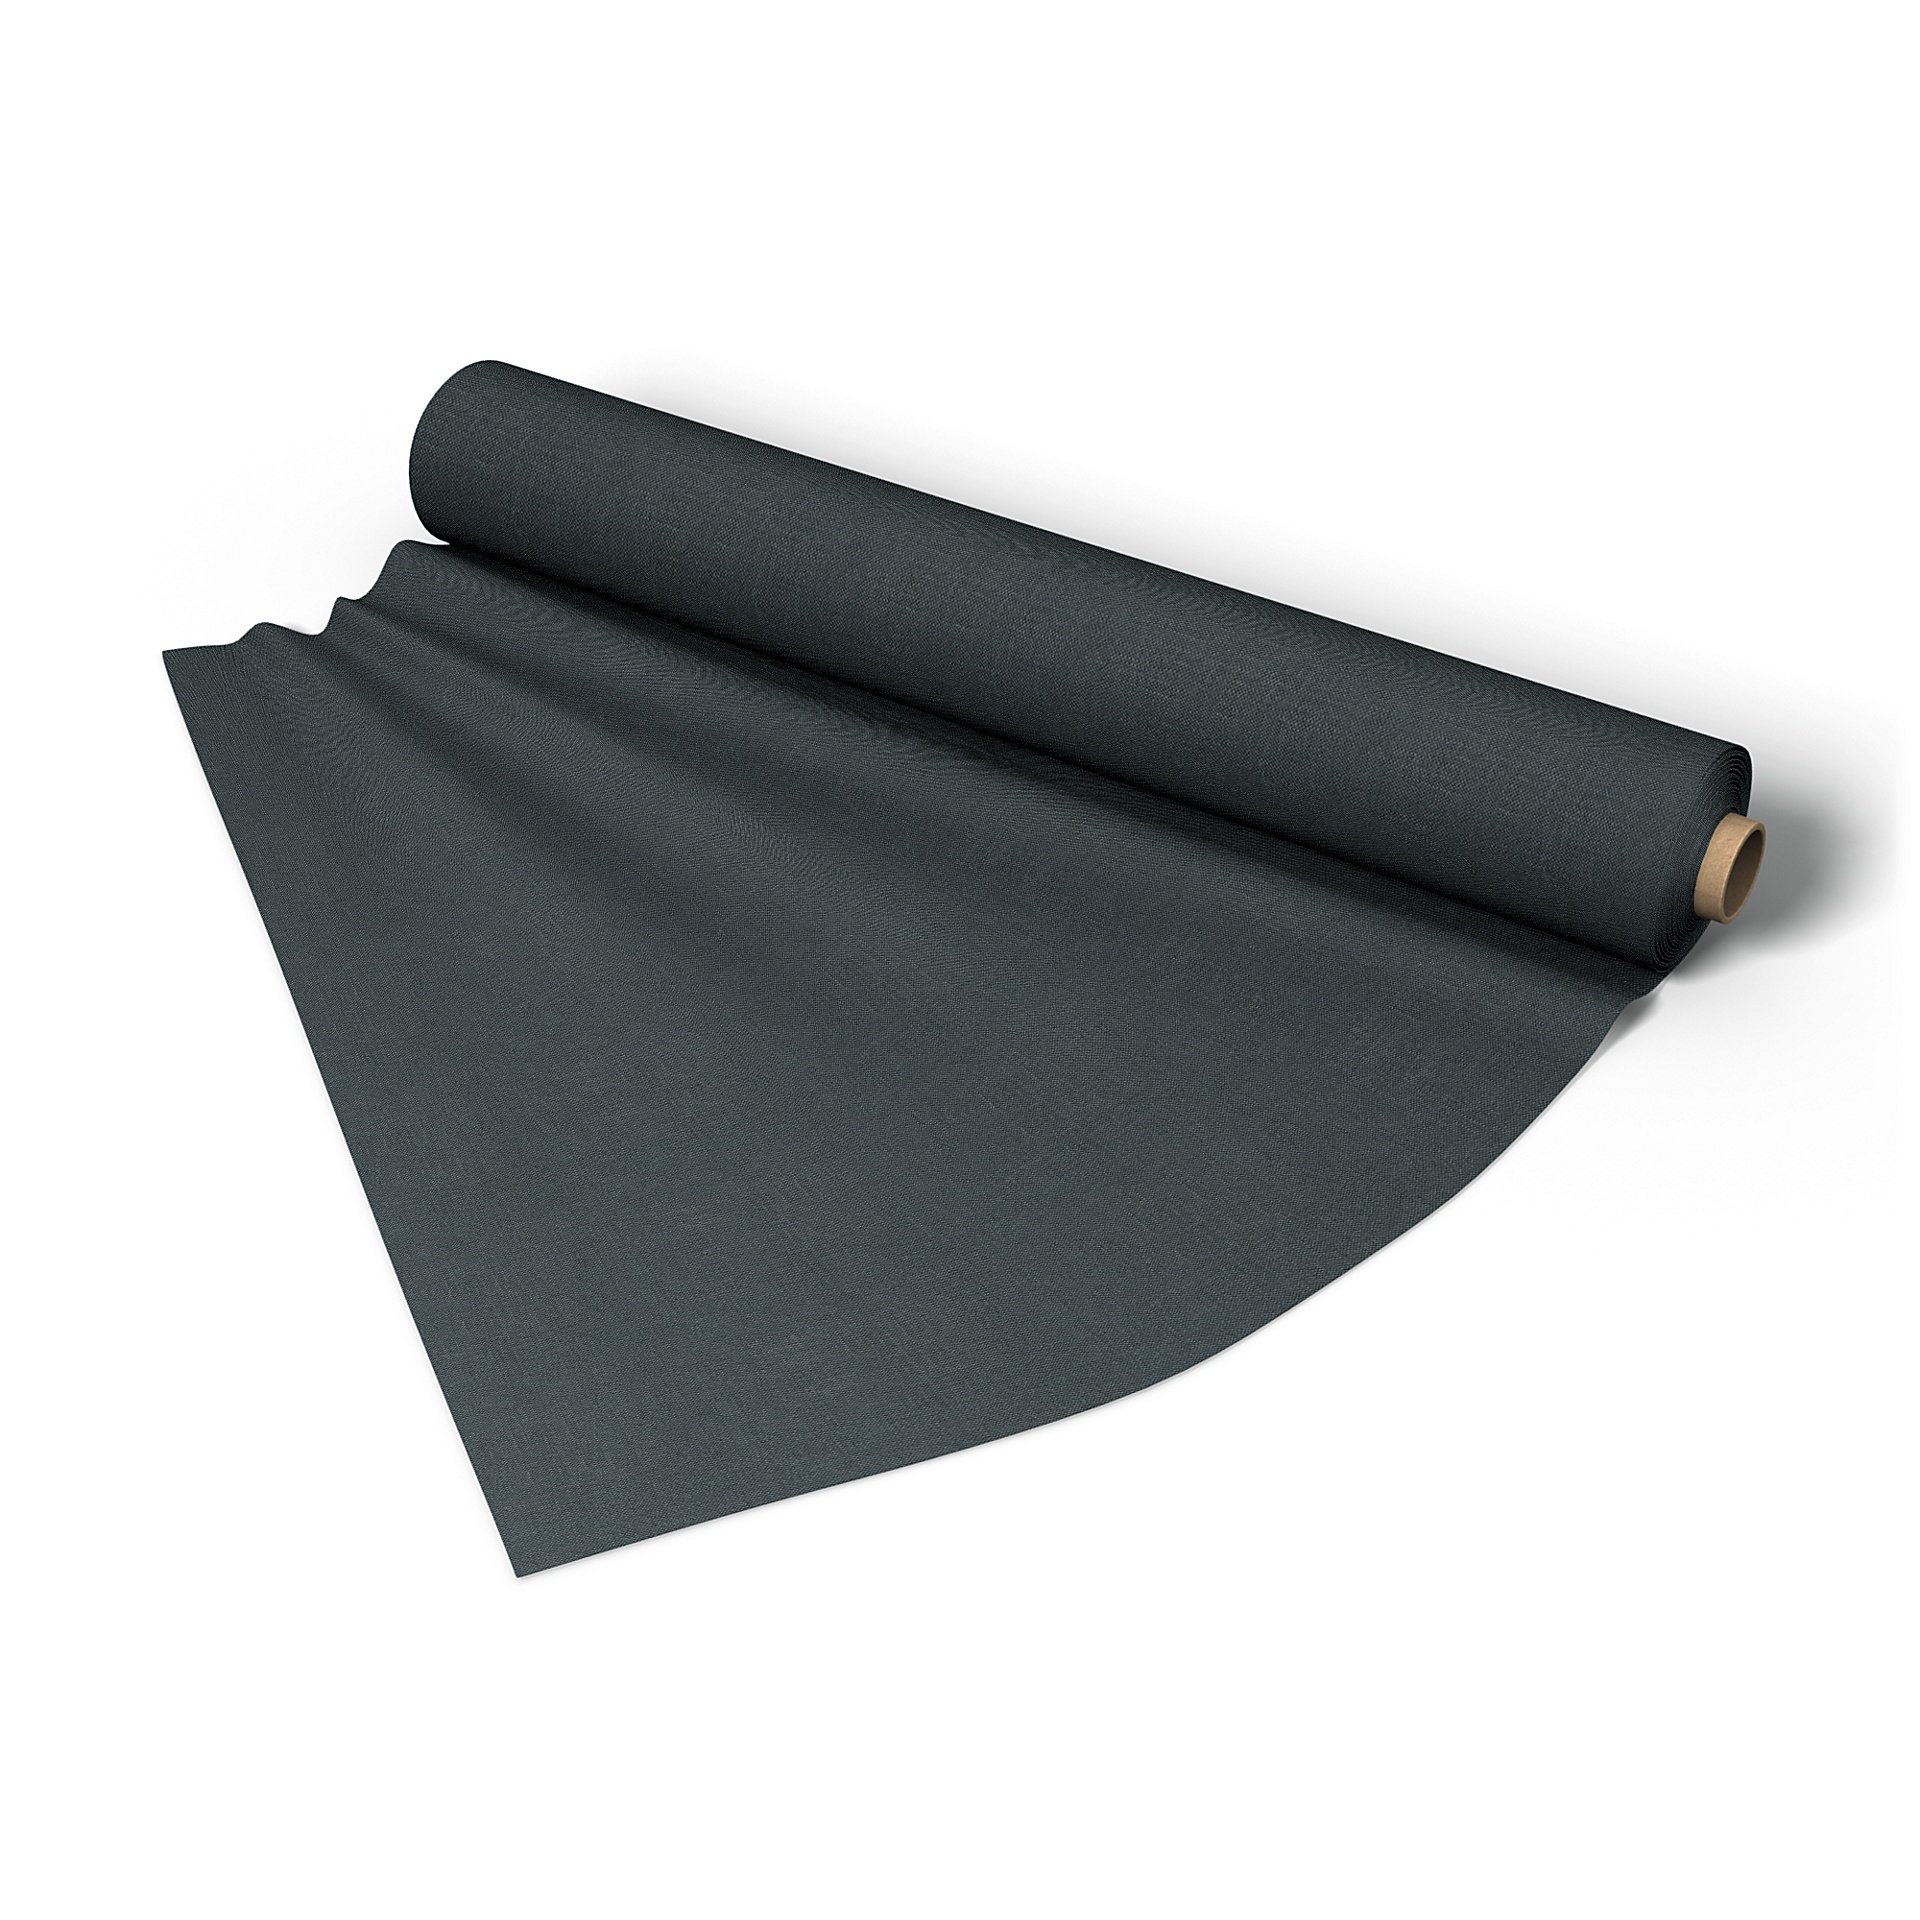 Fabric per metre, Graphite Grey, Linen - Bemz